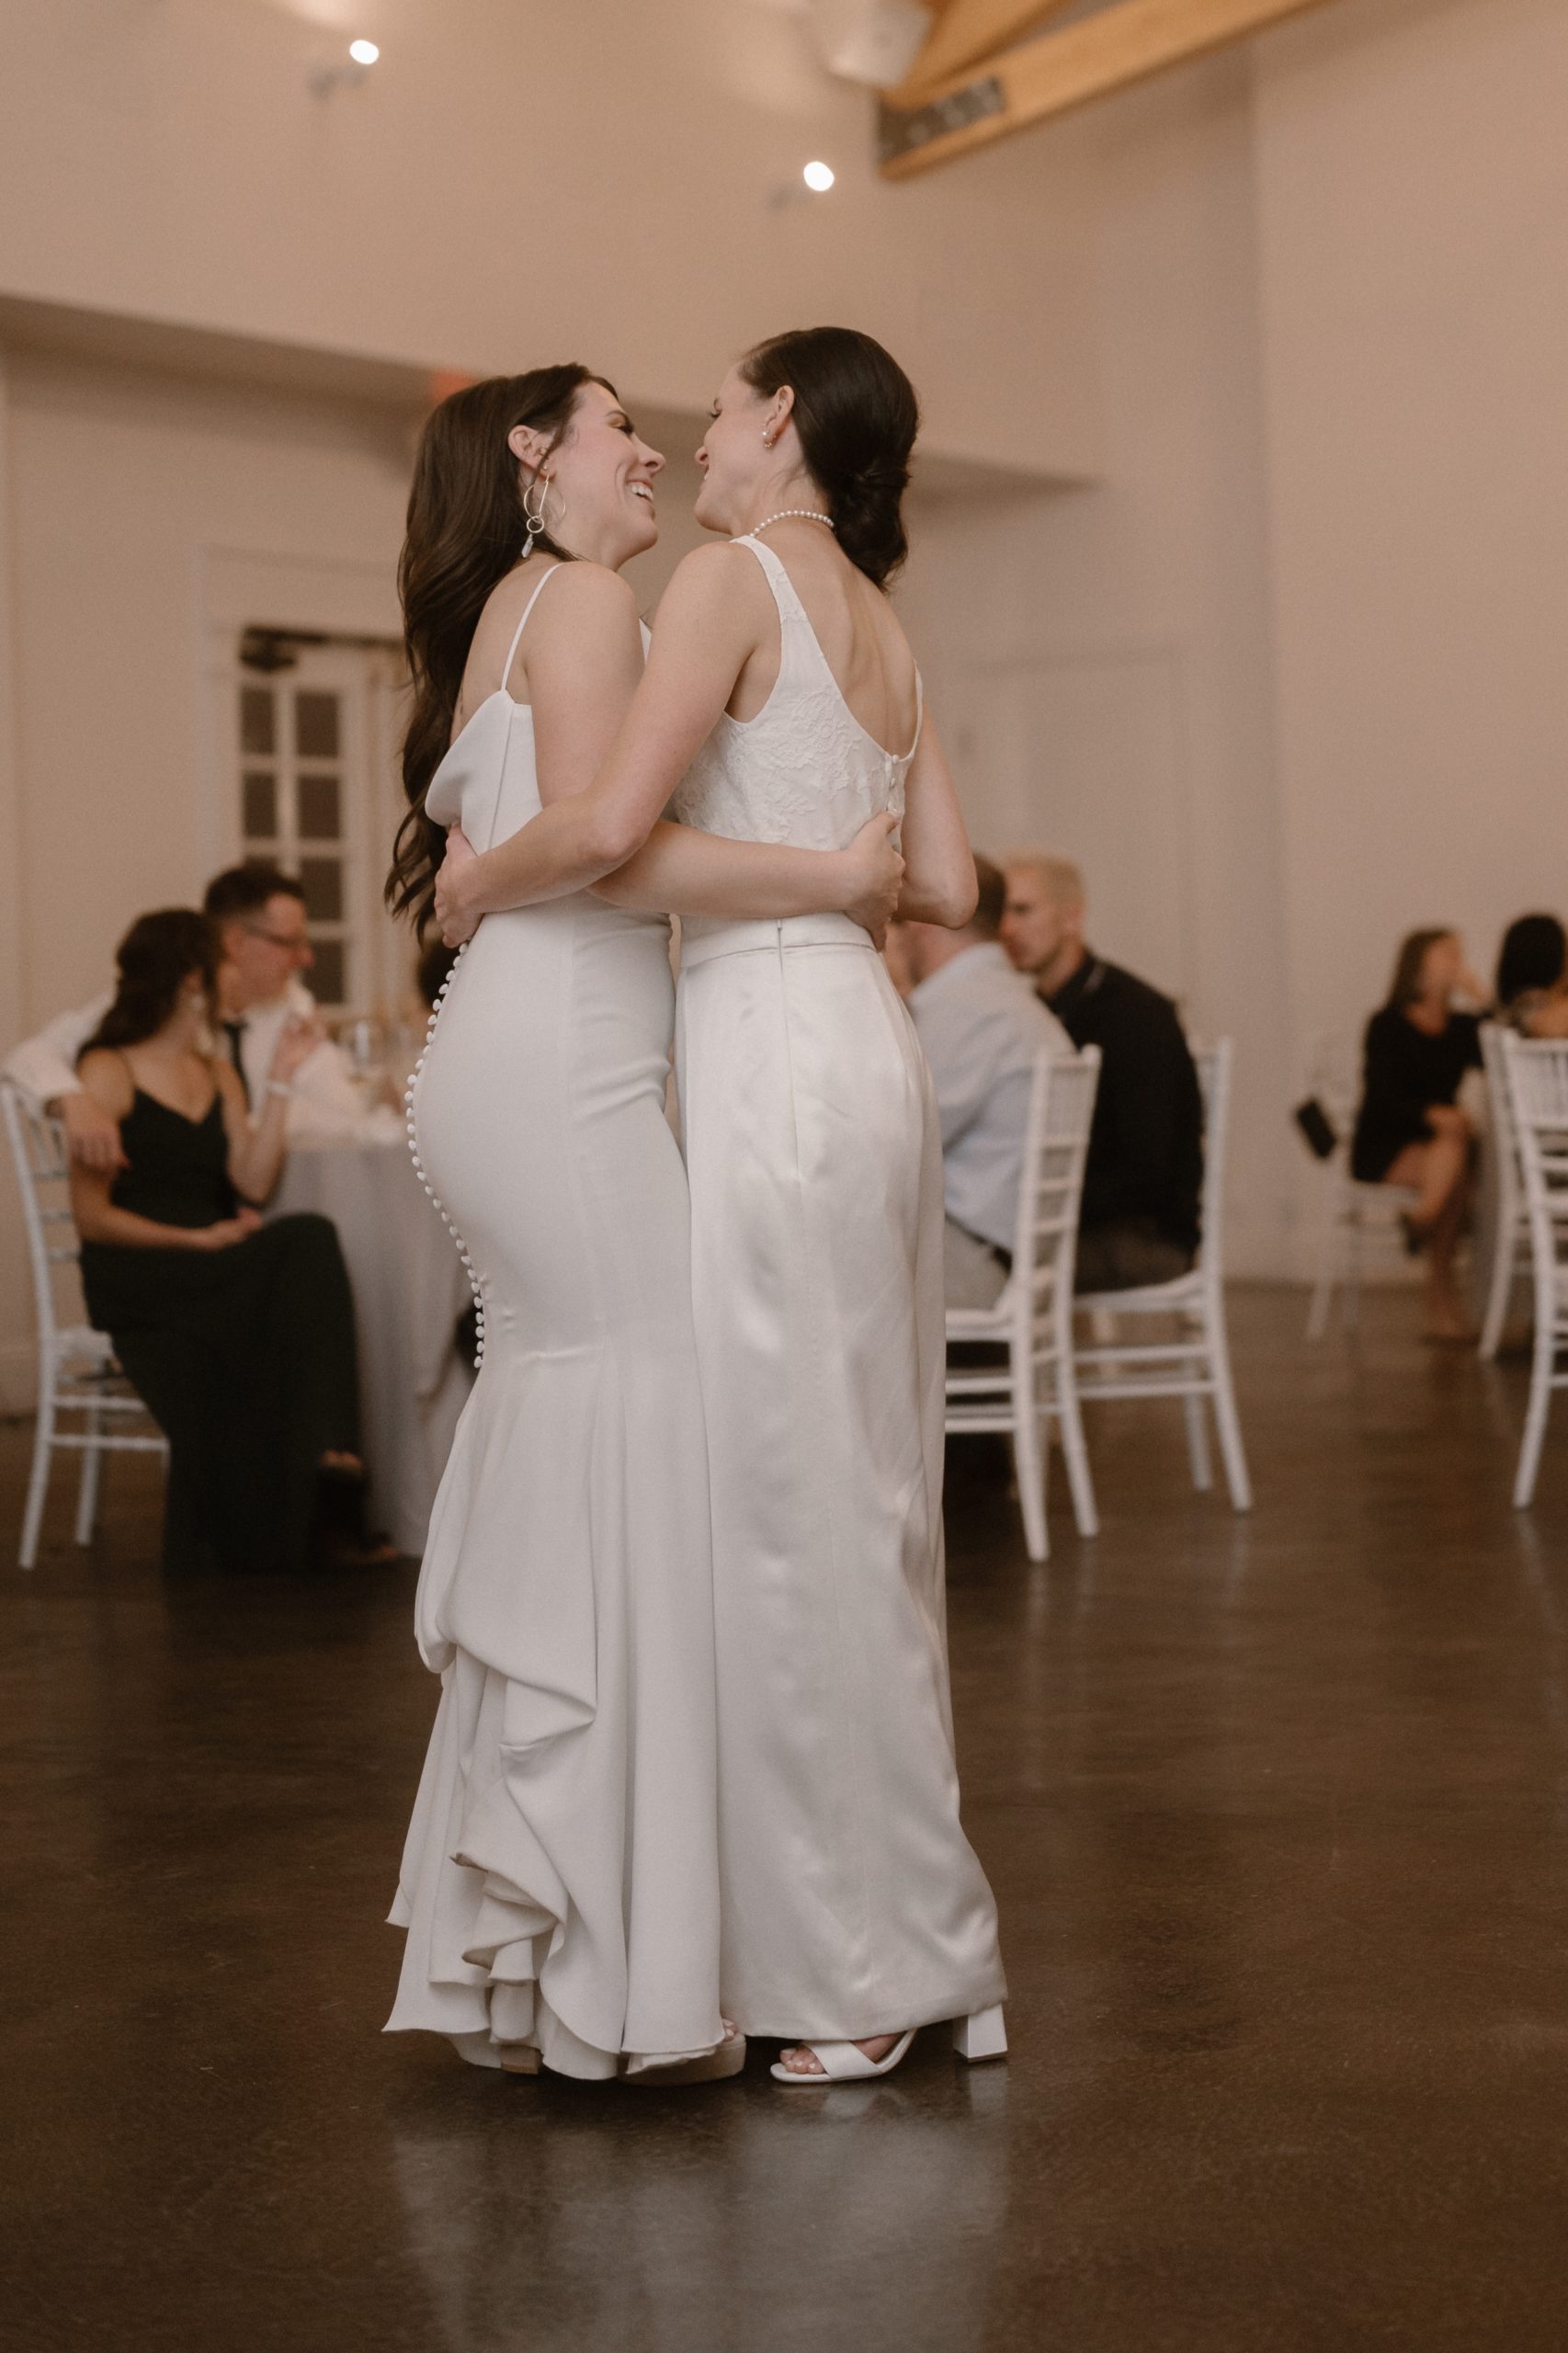 The Manor House Wedding | Littleton, CO Wedding | Lesbian wedding at The Manor House | LGBTQ Photographer | Ashley Joyce